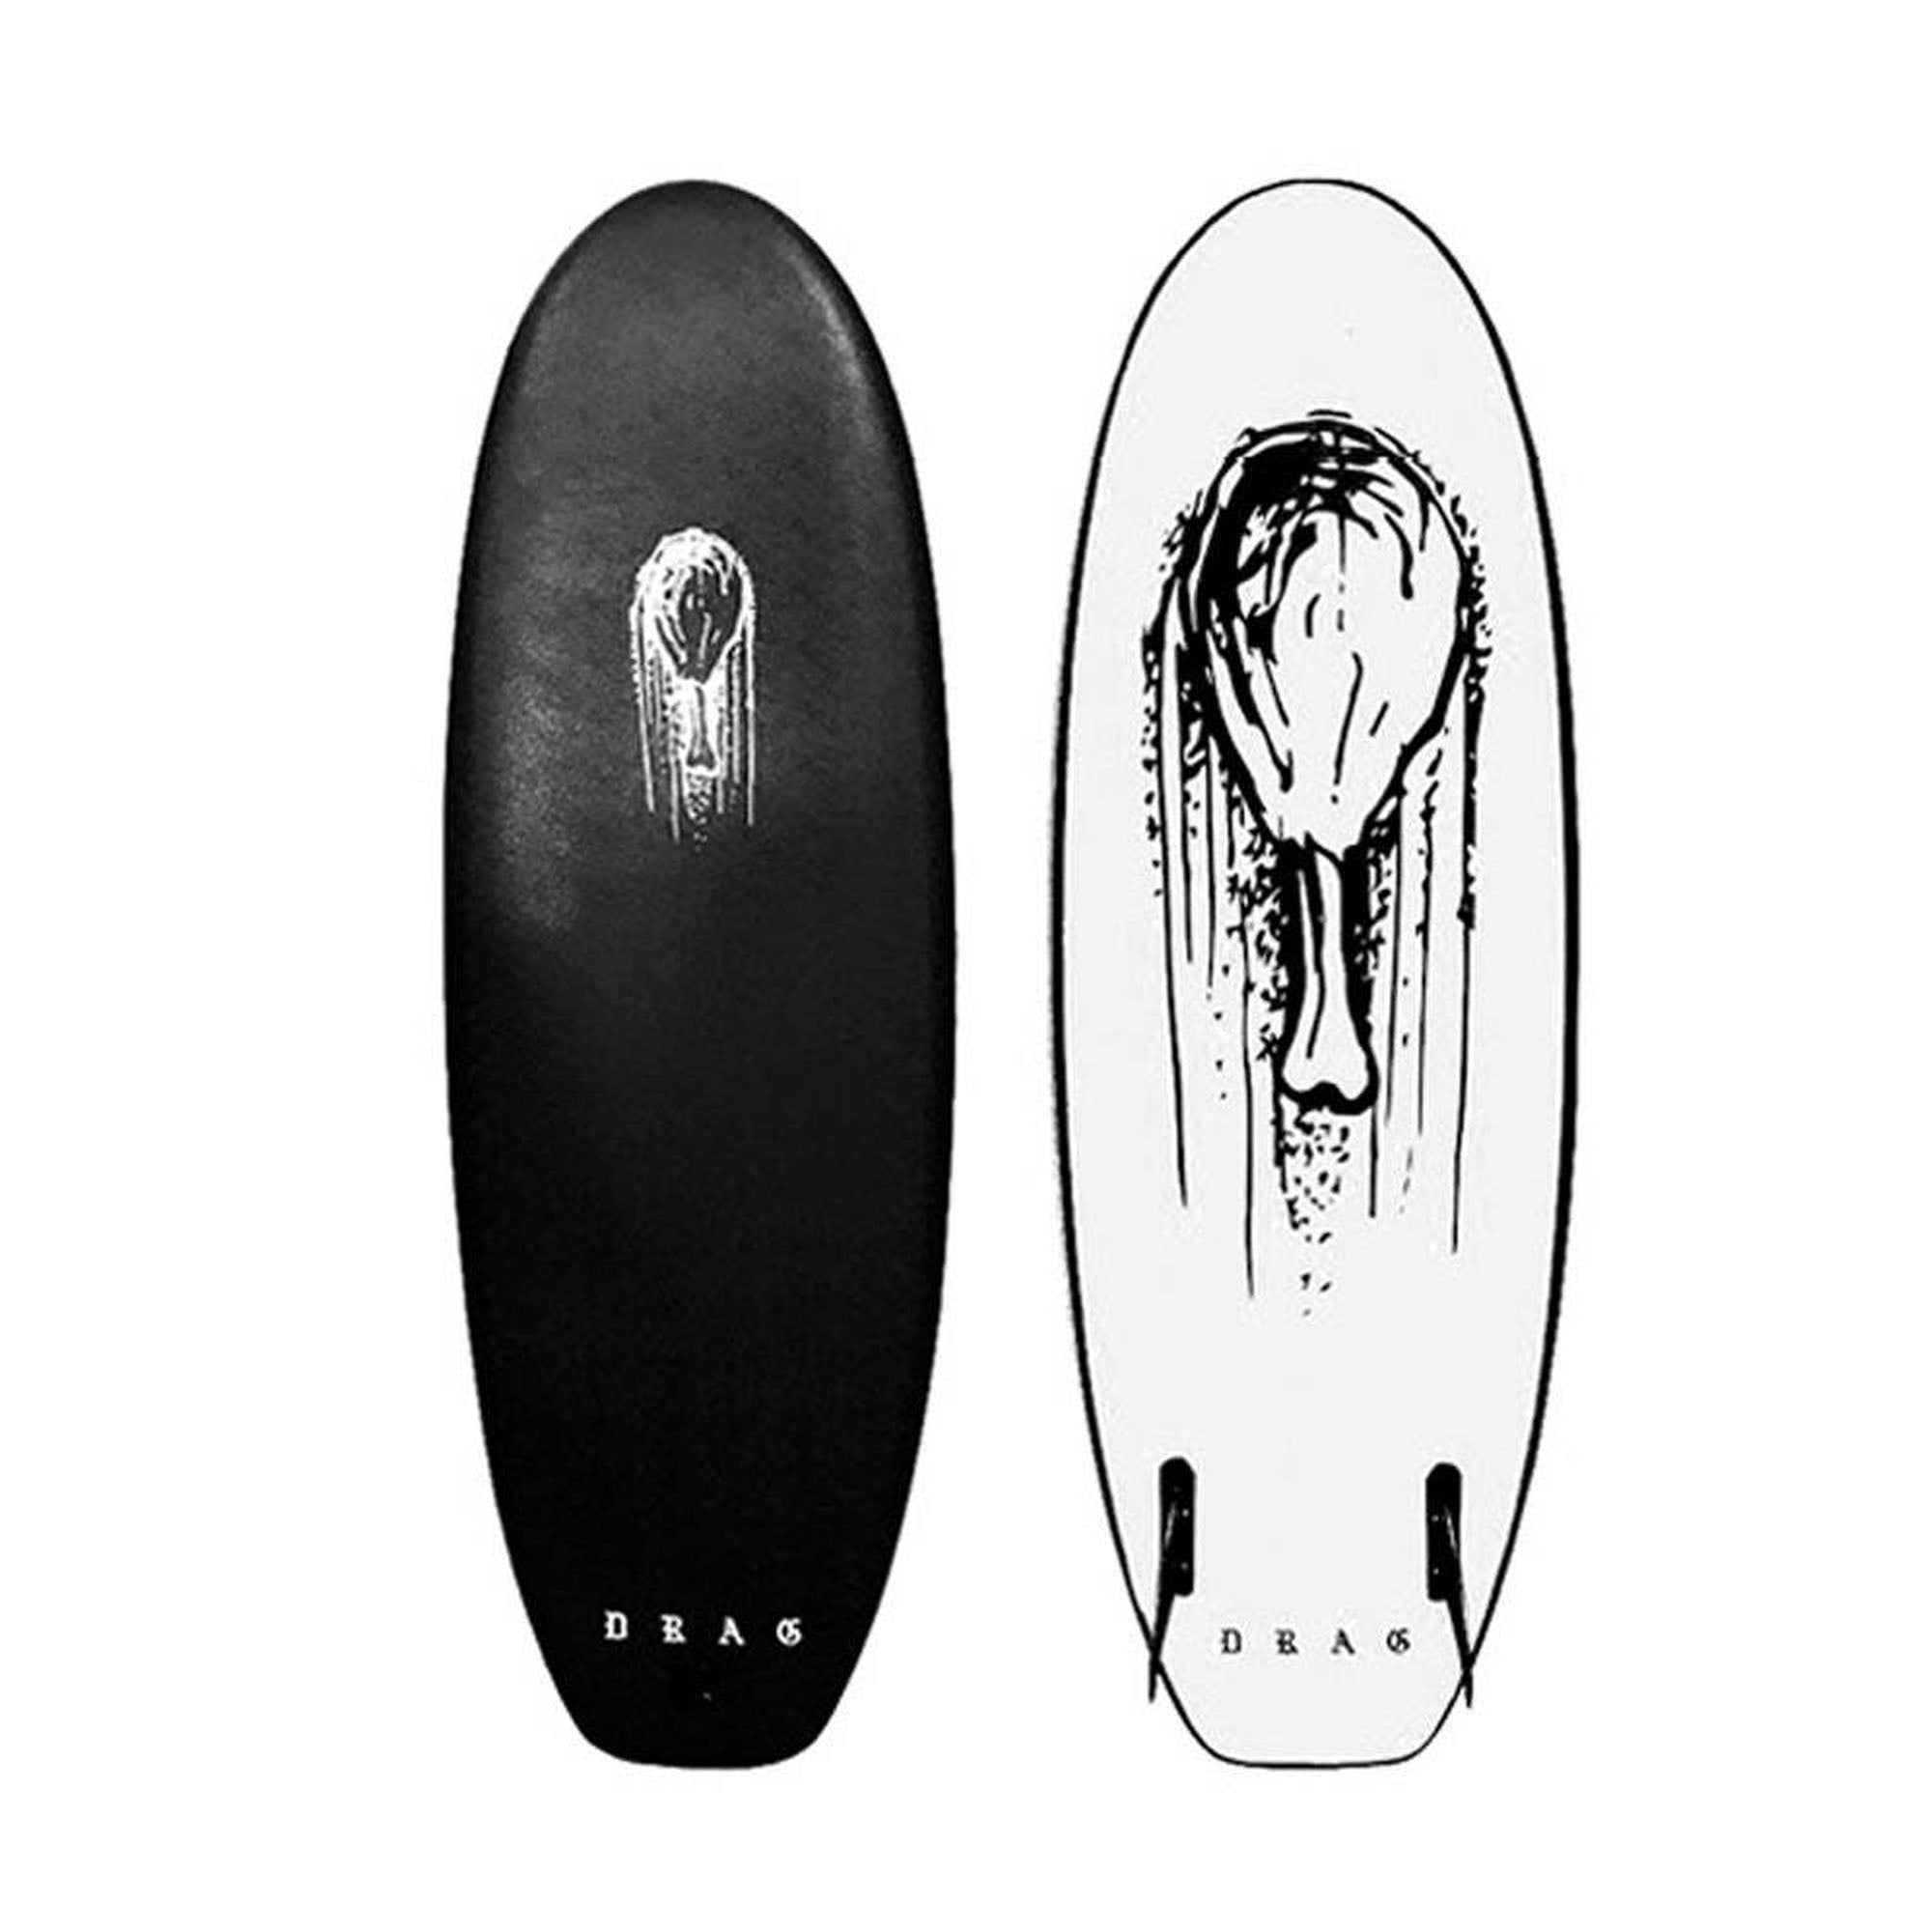 Drag Drumstick 4'10 Twin Fin Soft Surfboard